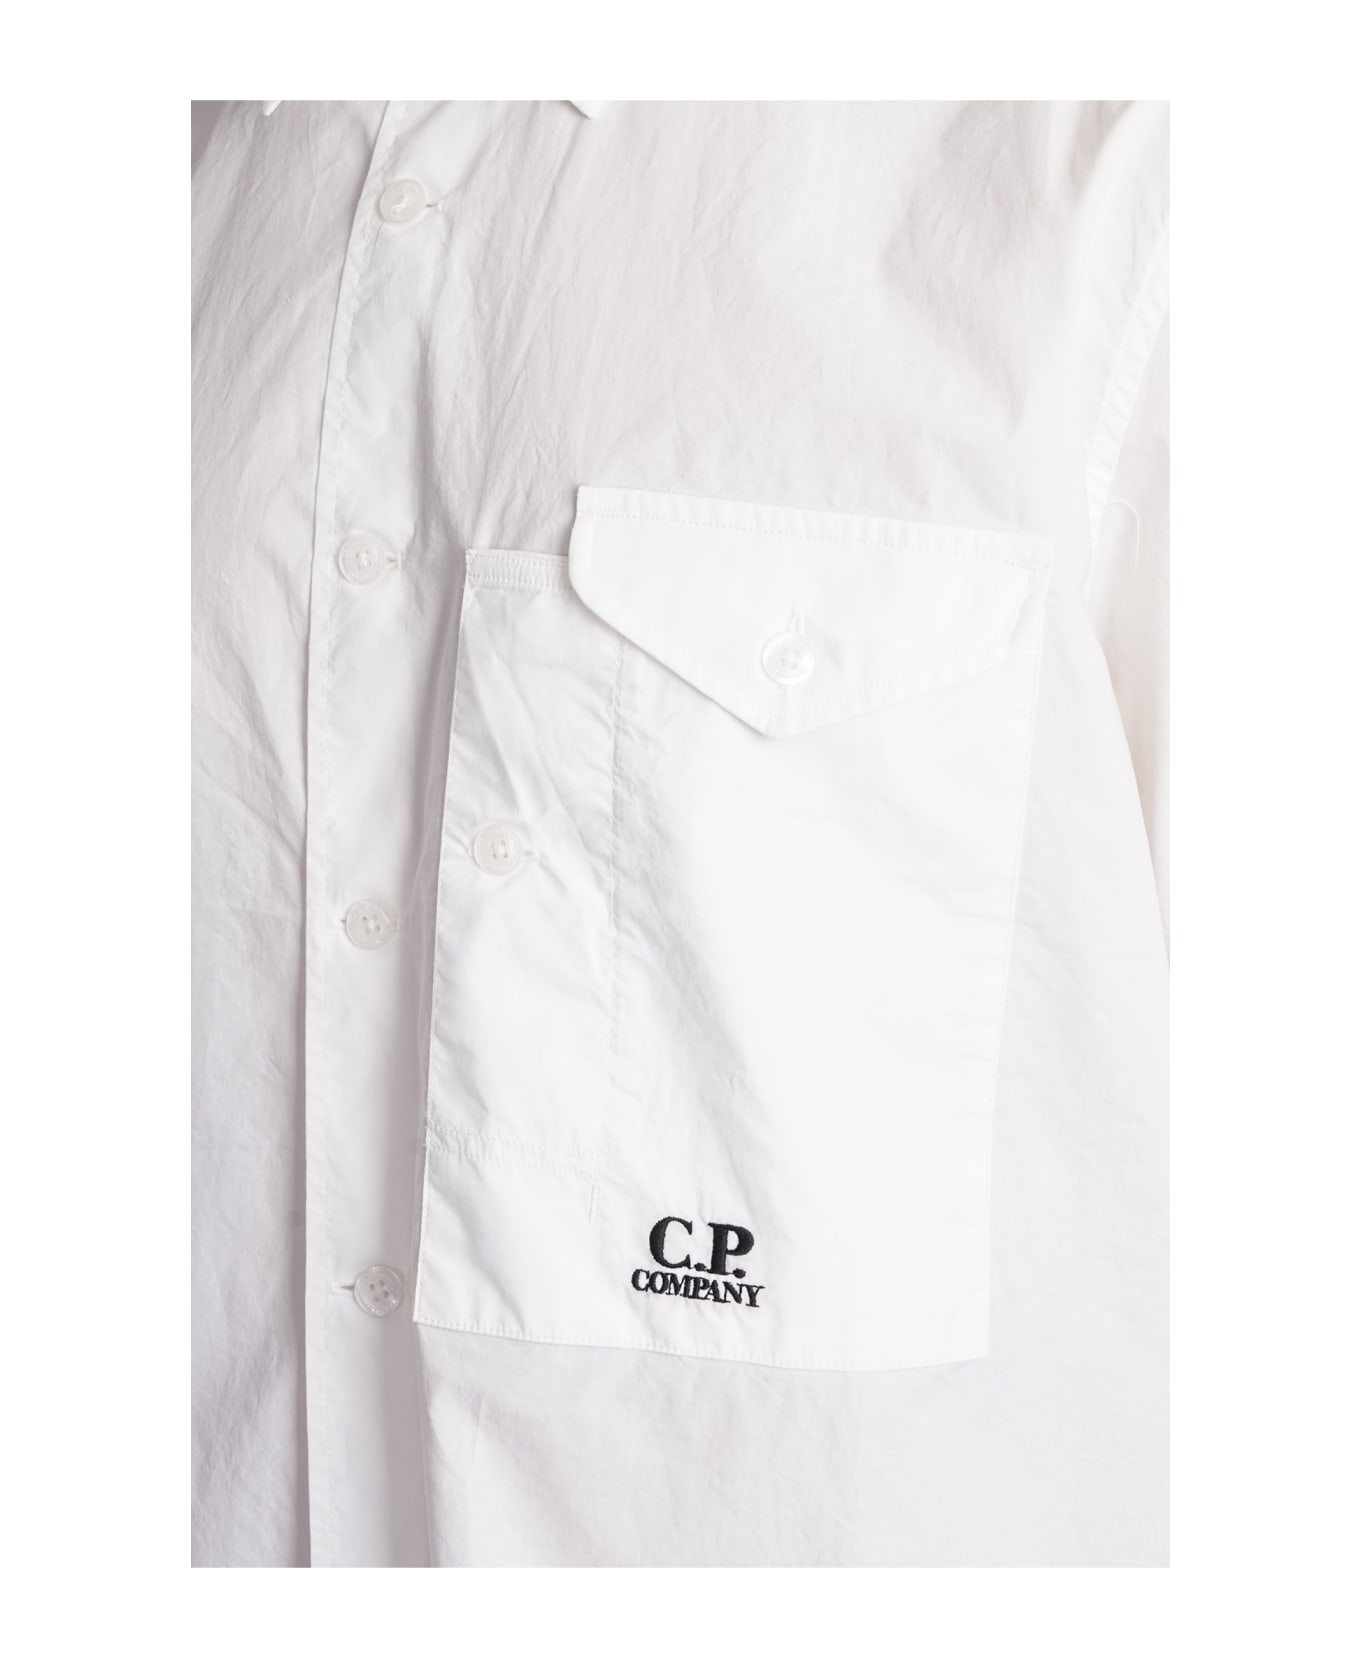 C.P. Company Logo Embroidery Shirt - GAUZEWHITE